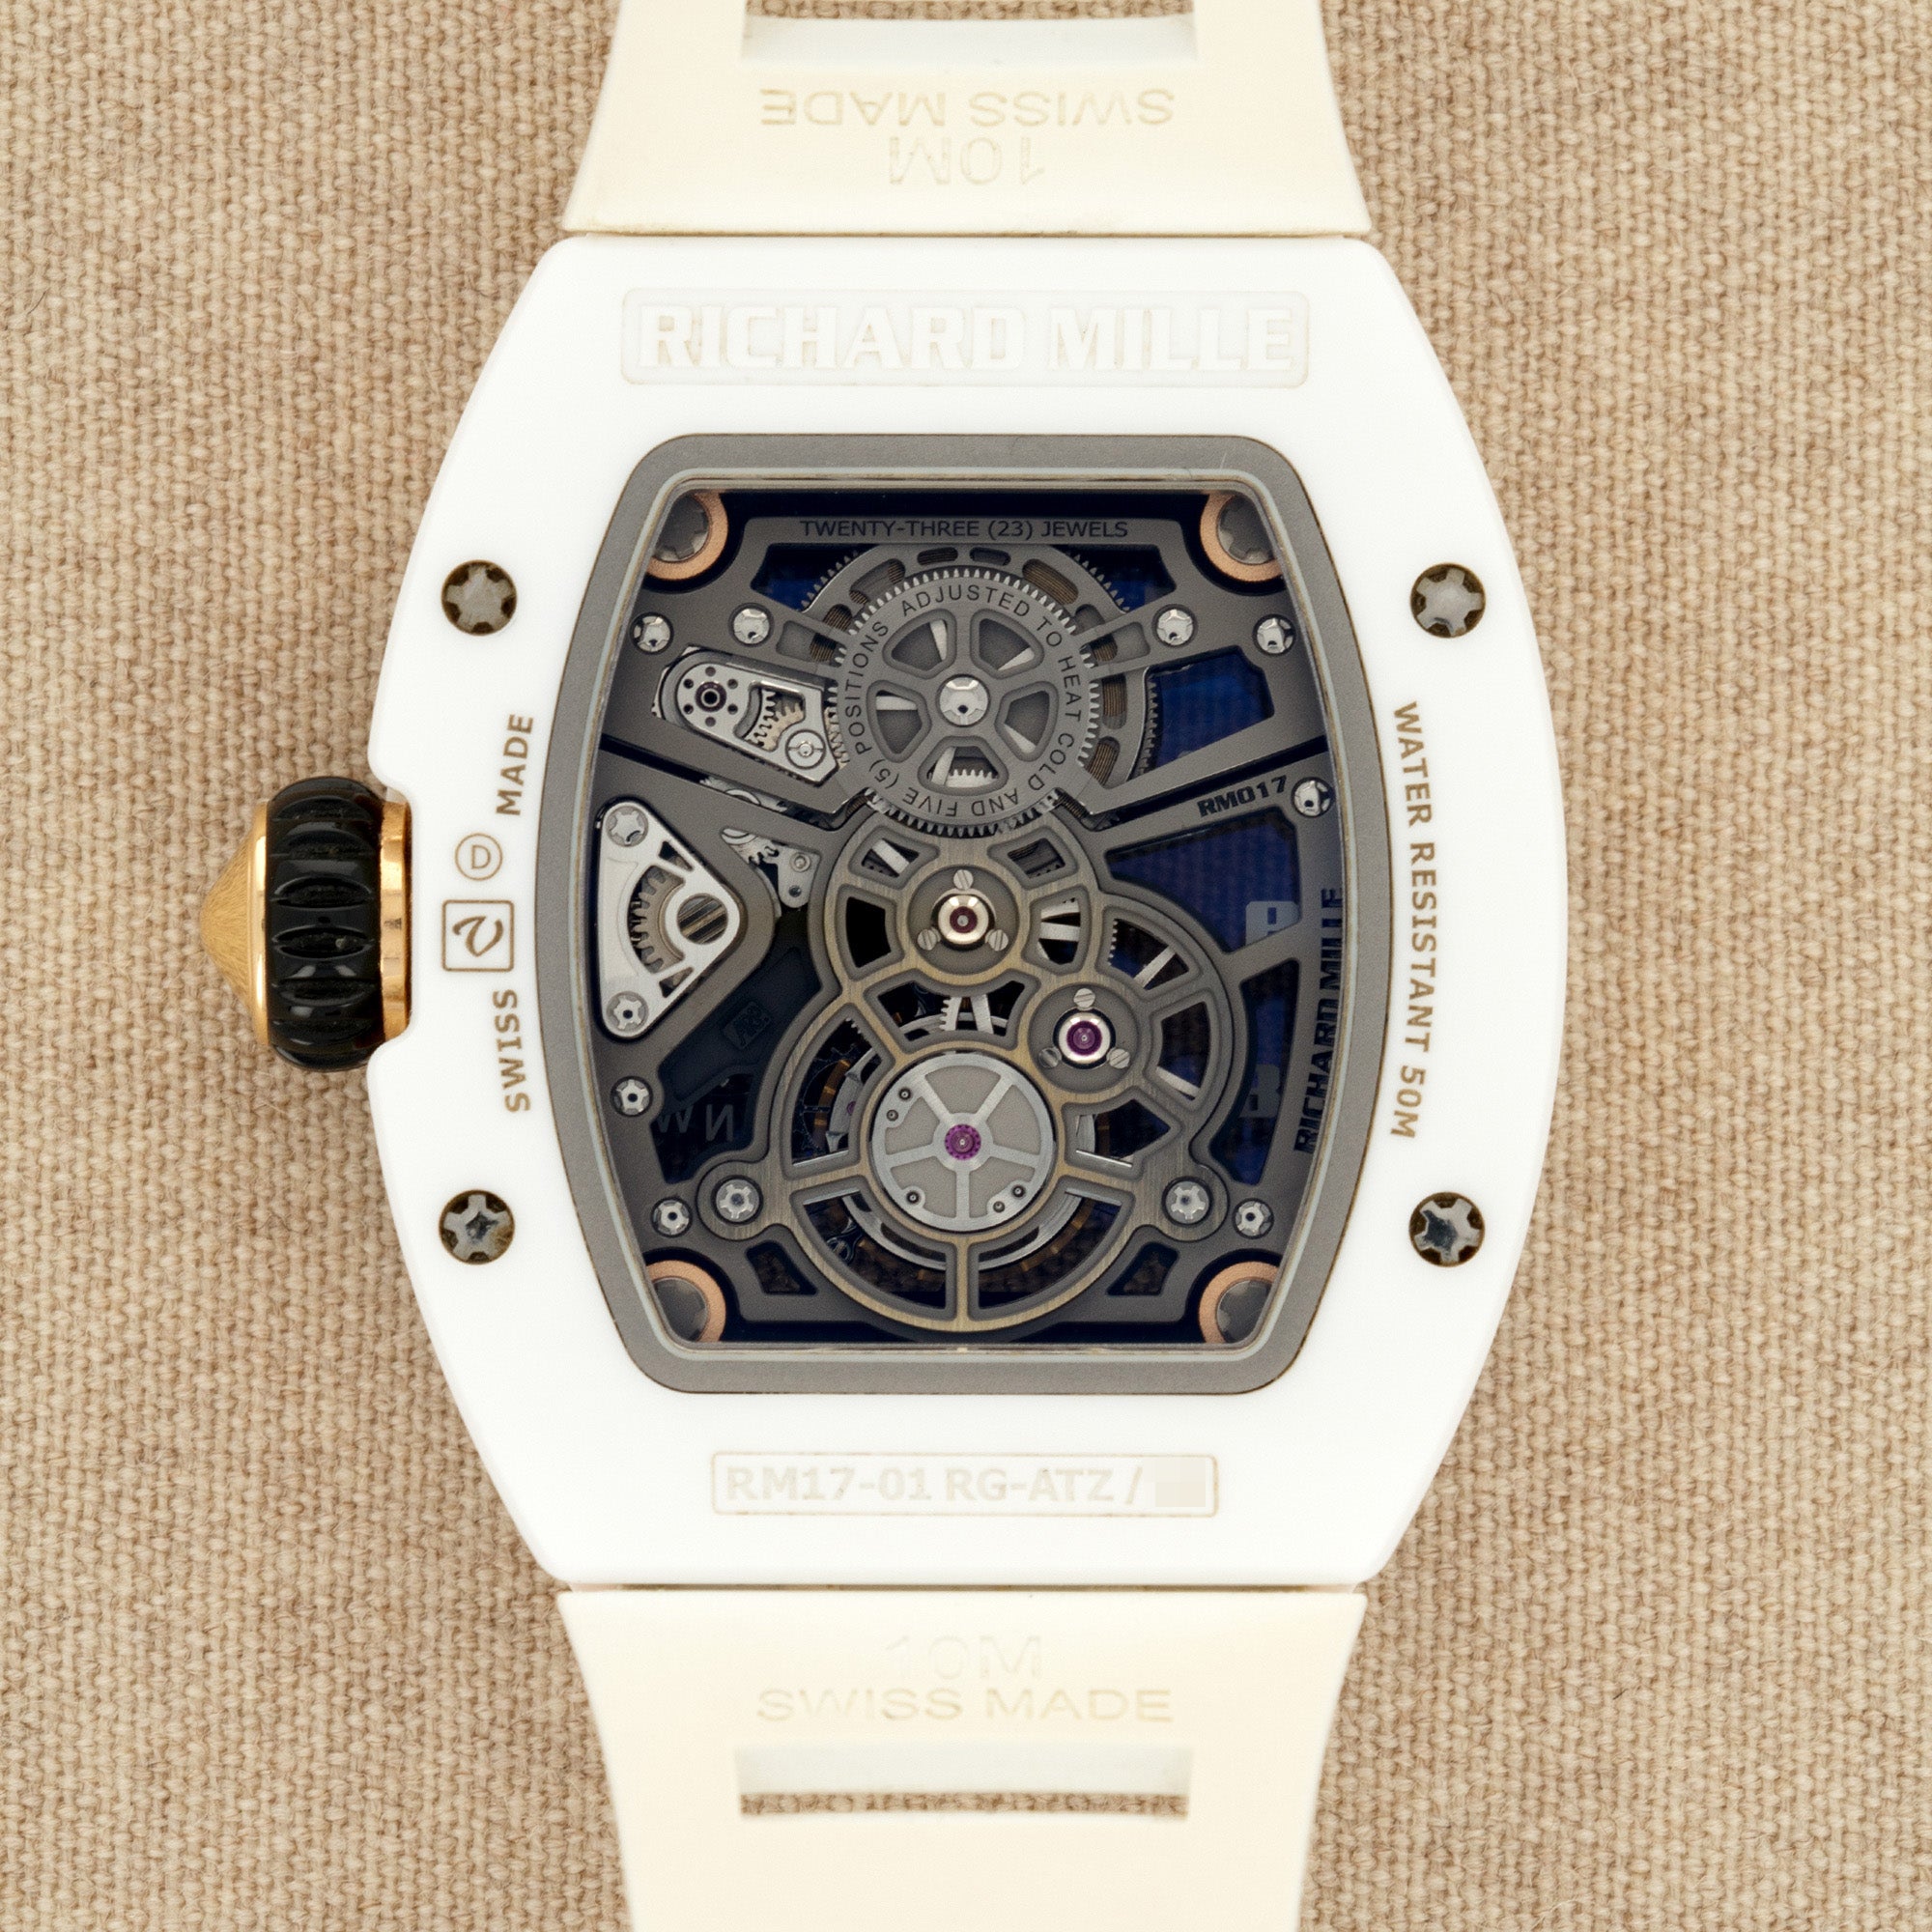 Richard Mille - Richard Mille Manual Winding Tourbillon RM17-01 - The Keystone Watches